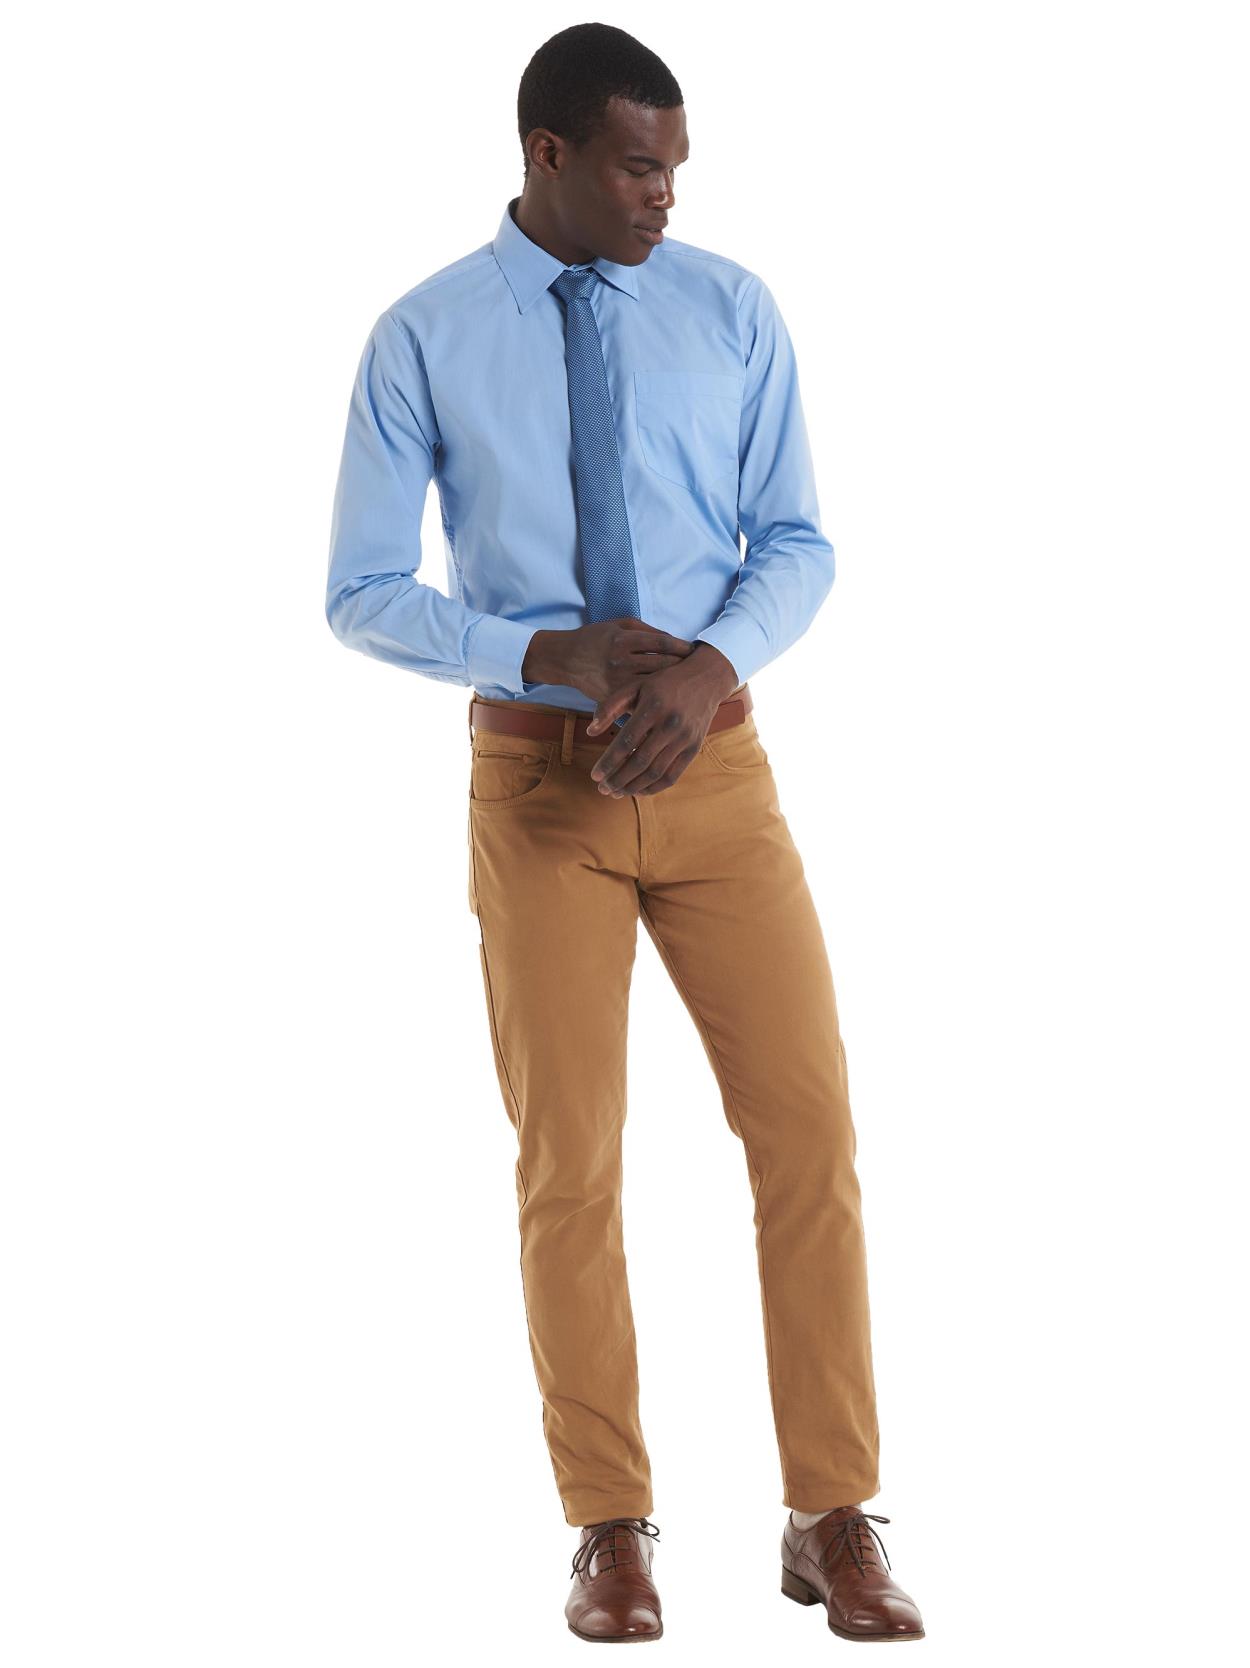  UC713  Men's Long Sleeve Poplin Shirt Image 1